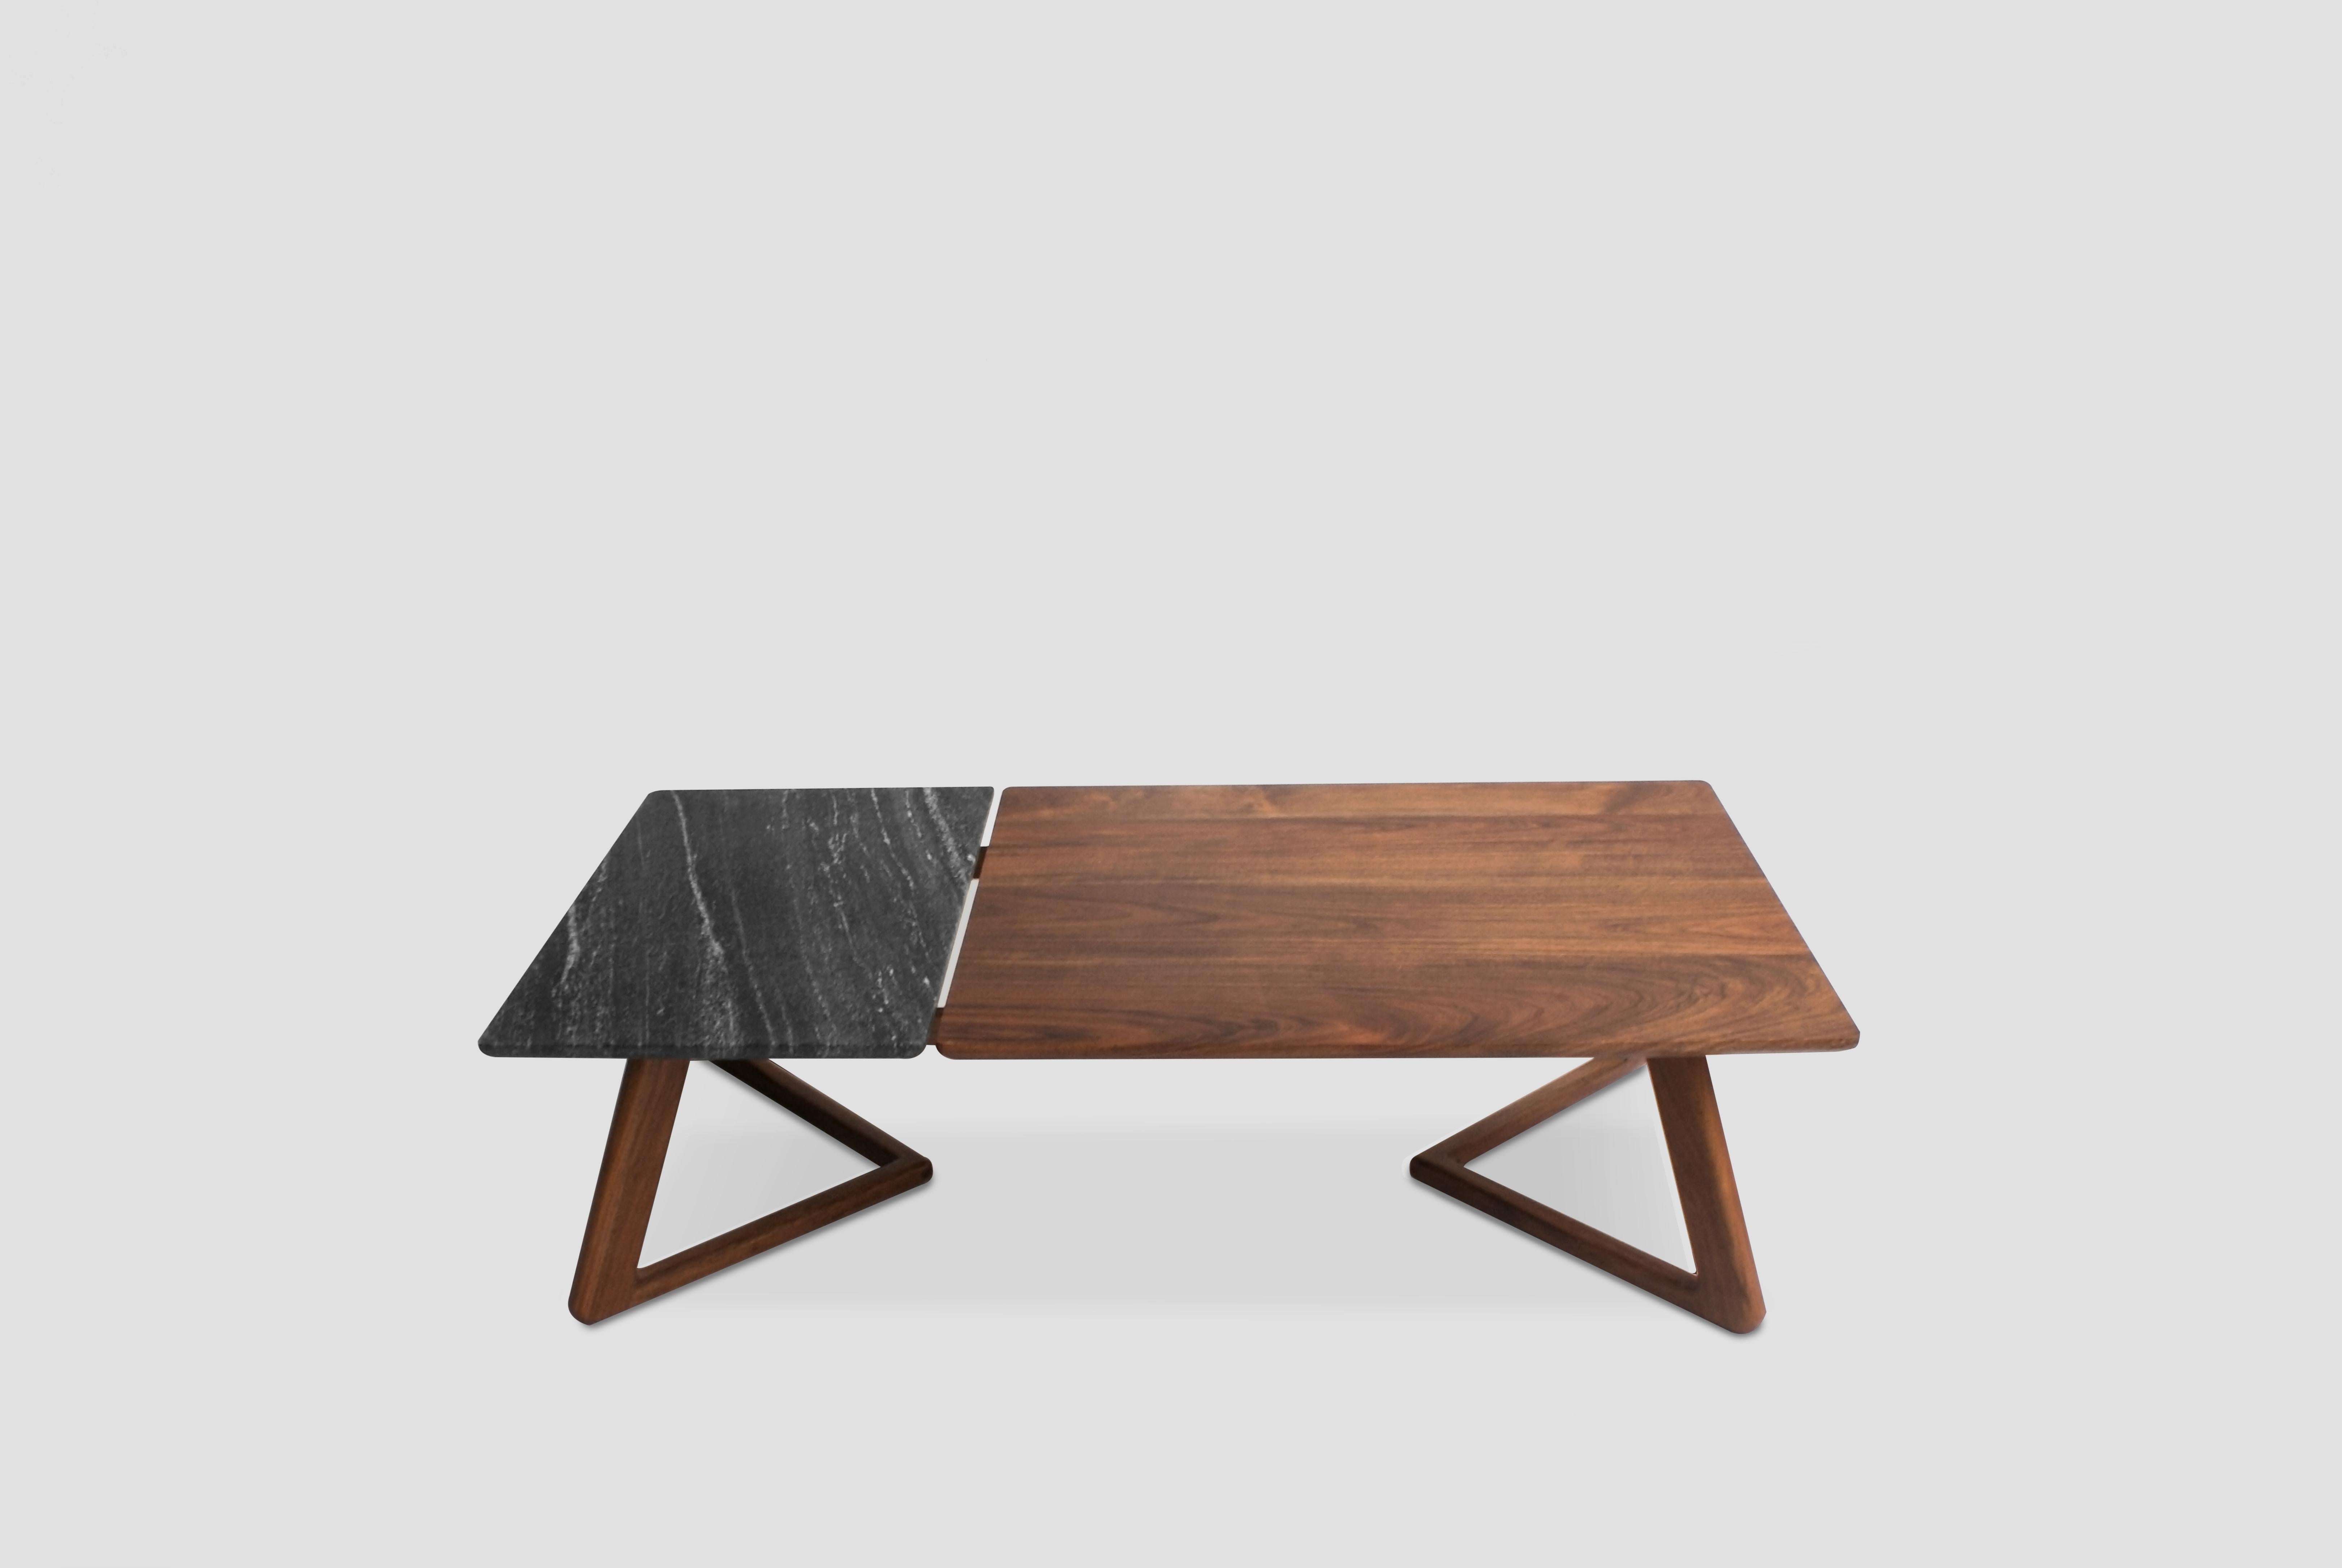 Tacua coffee table by Óscar Núñez
Dimensions: D 200 x W 110 x H 35 cm
Materials: walnut wood, ebony crystal granite.
Available in other sizes.

Ebony crystal granite and walnut coffee table.

Oscar Nuñez is an industrial designer graduated